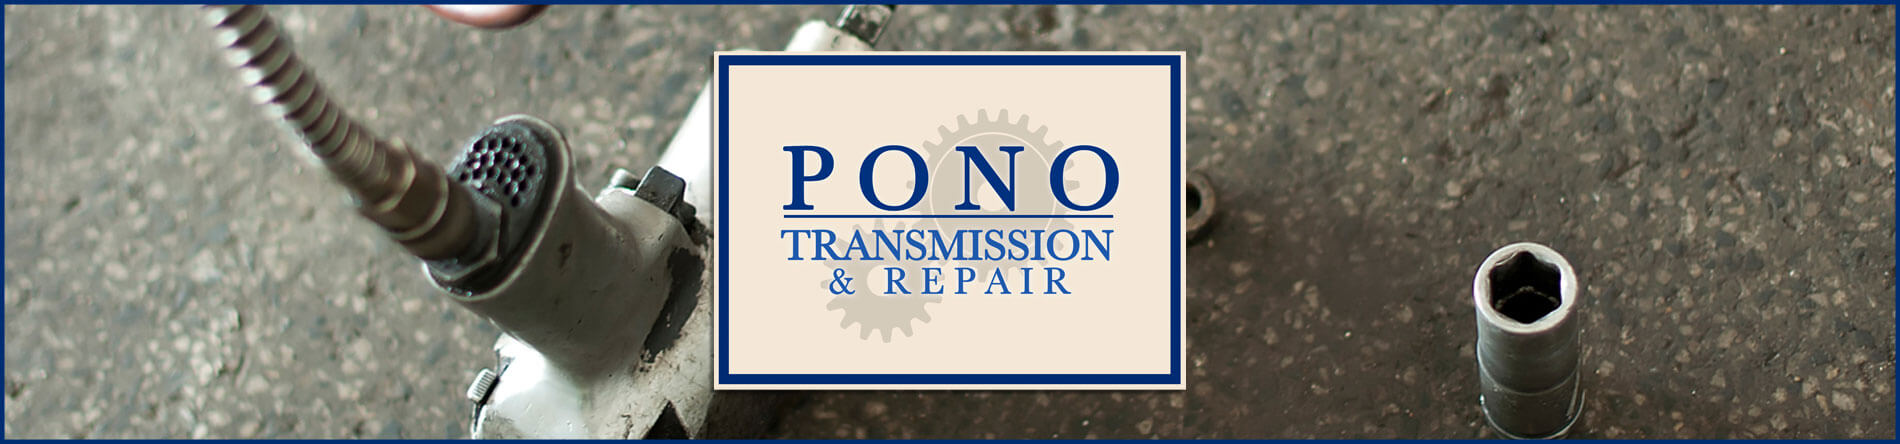 Pono Transmission & Repair Services